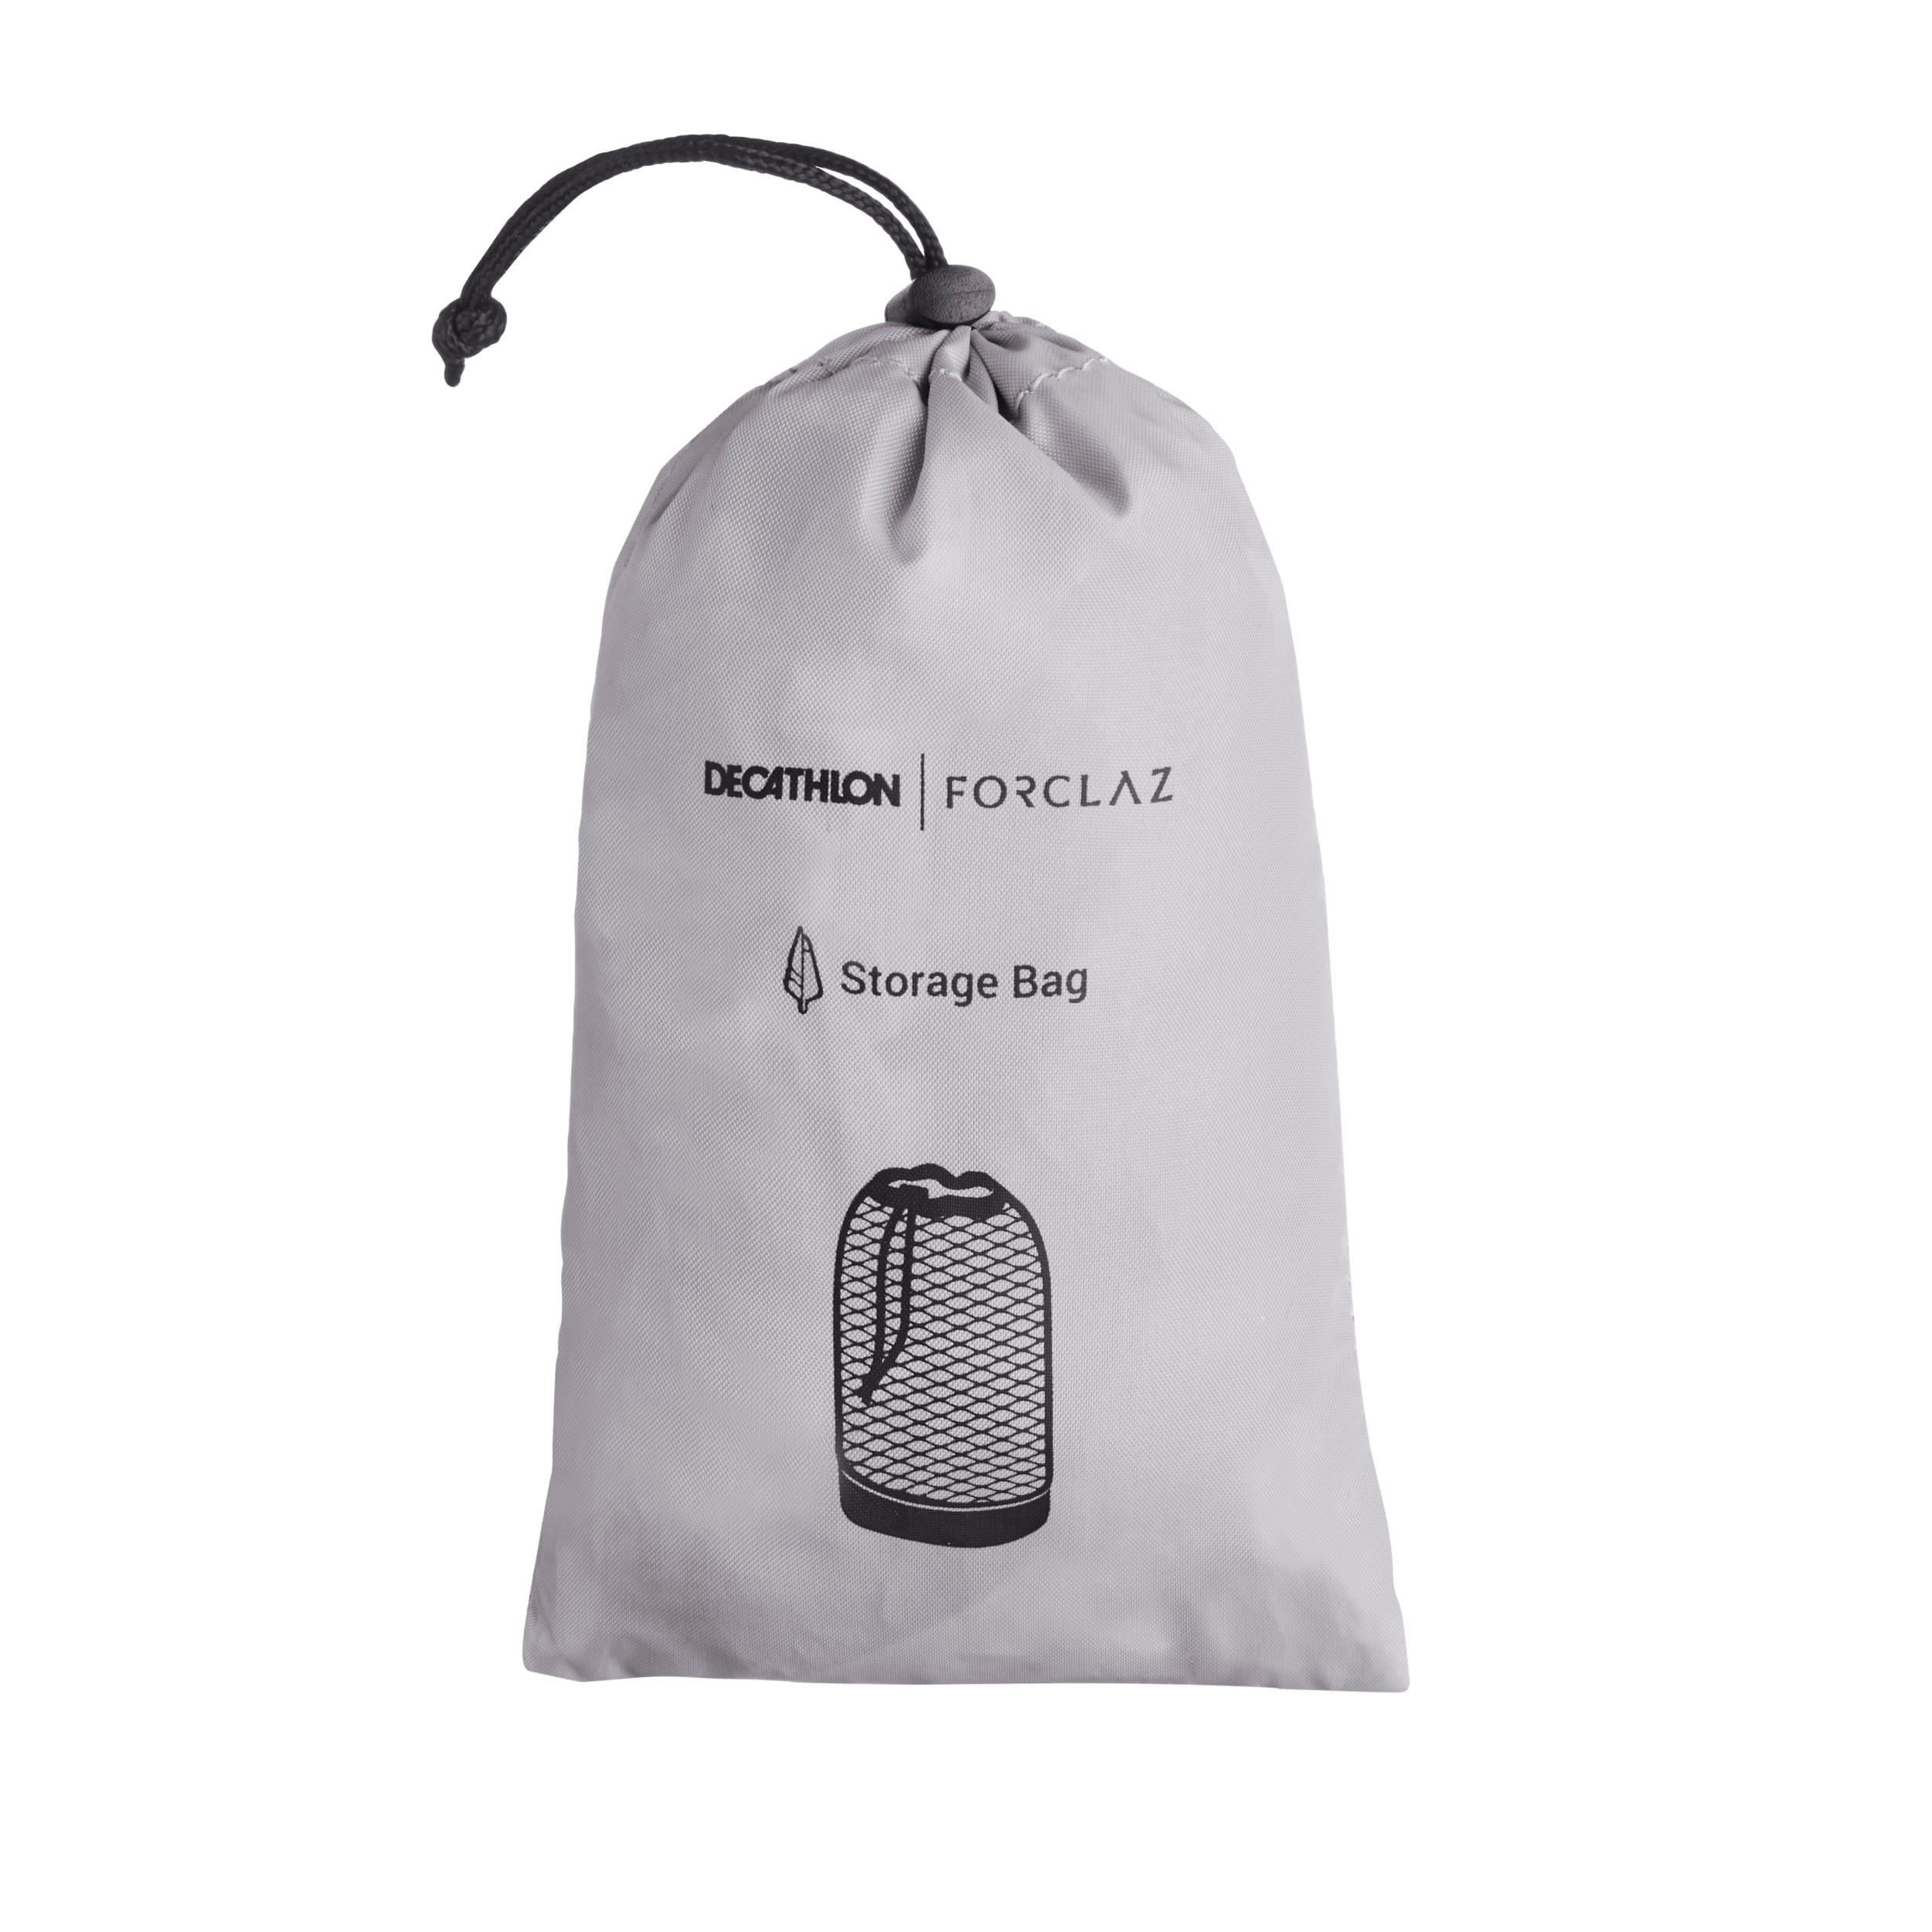 decathlon store bag